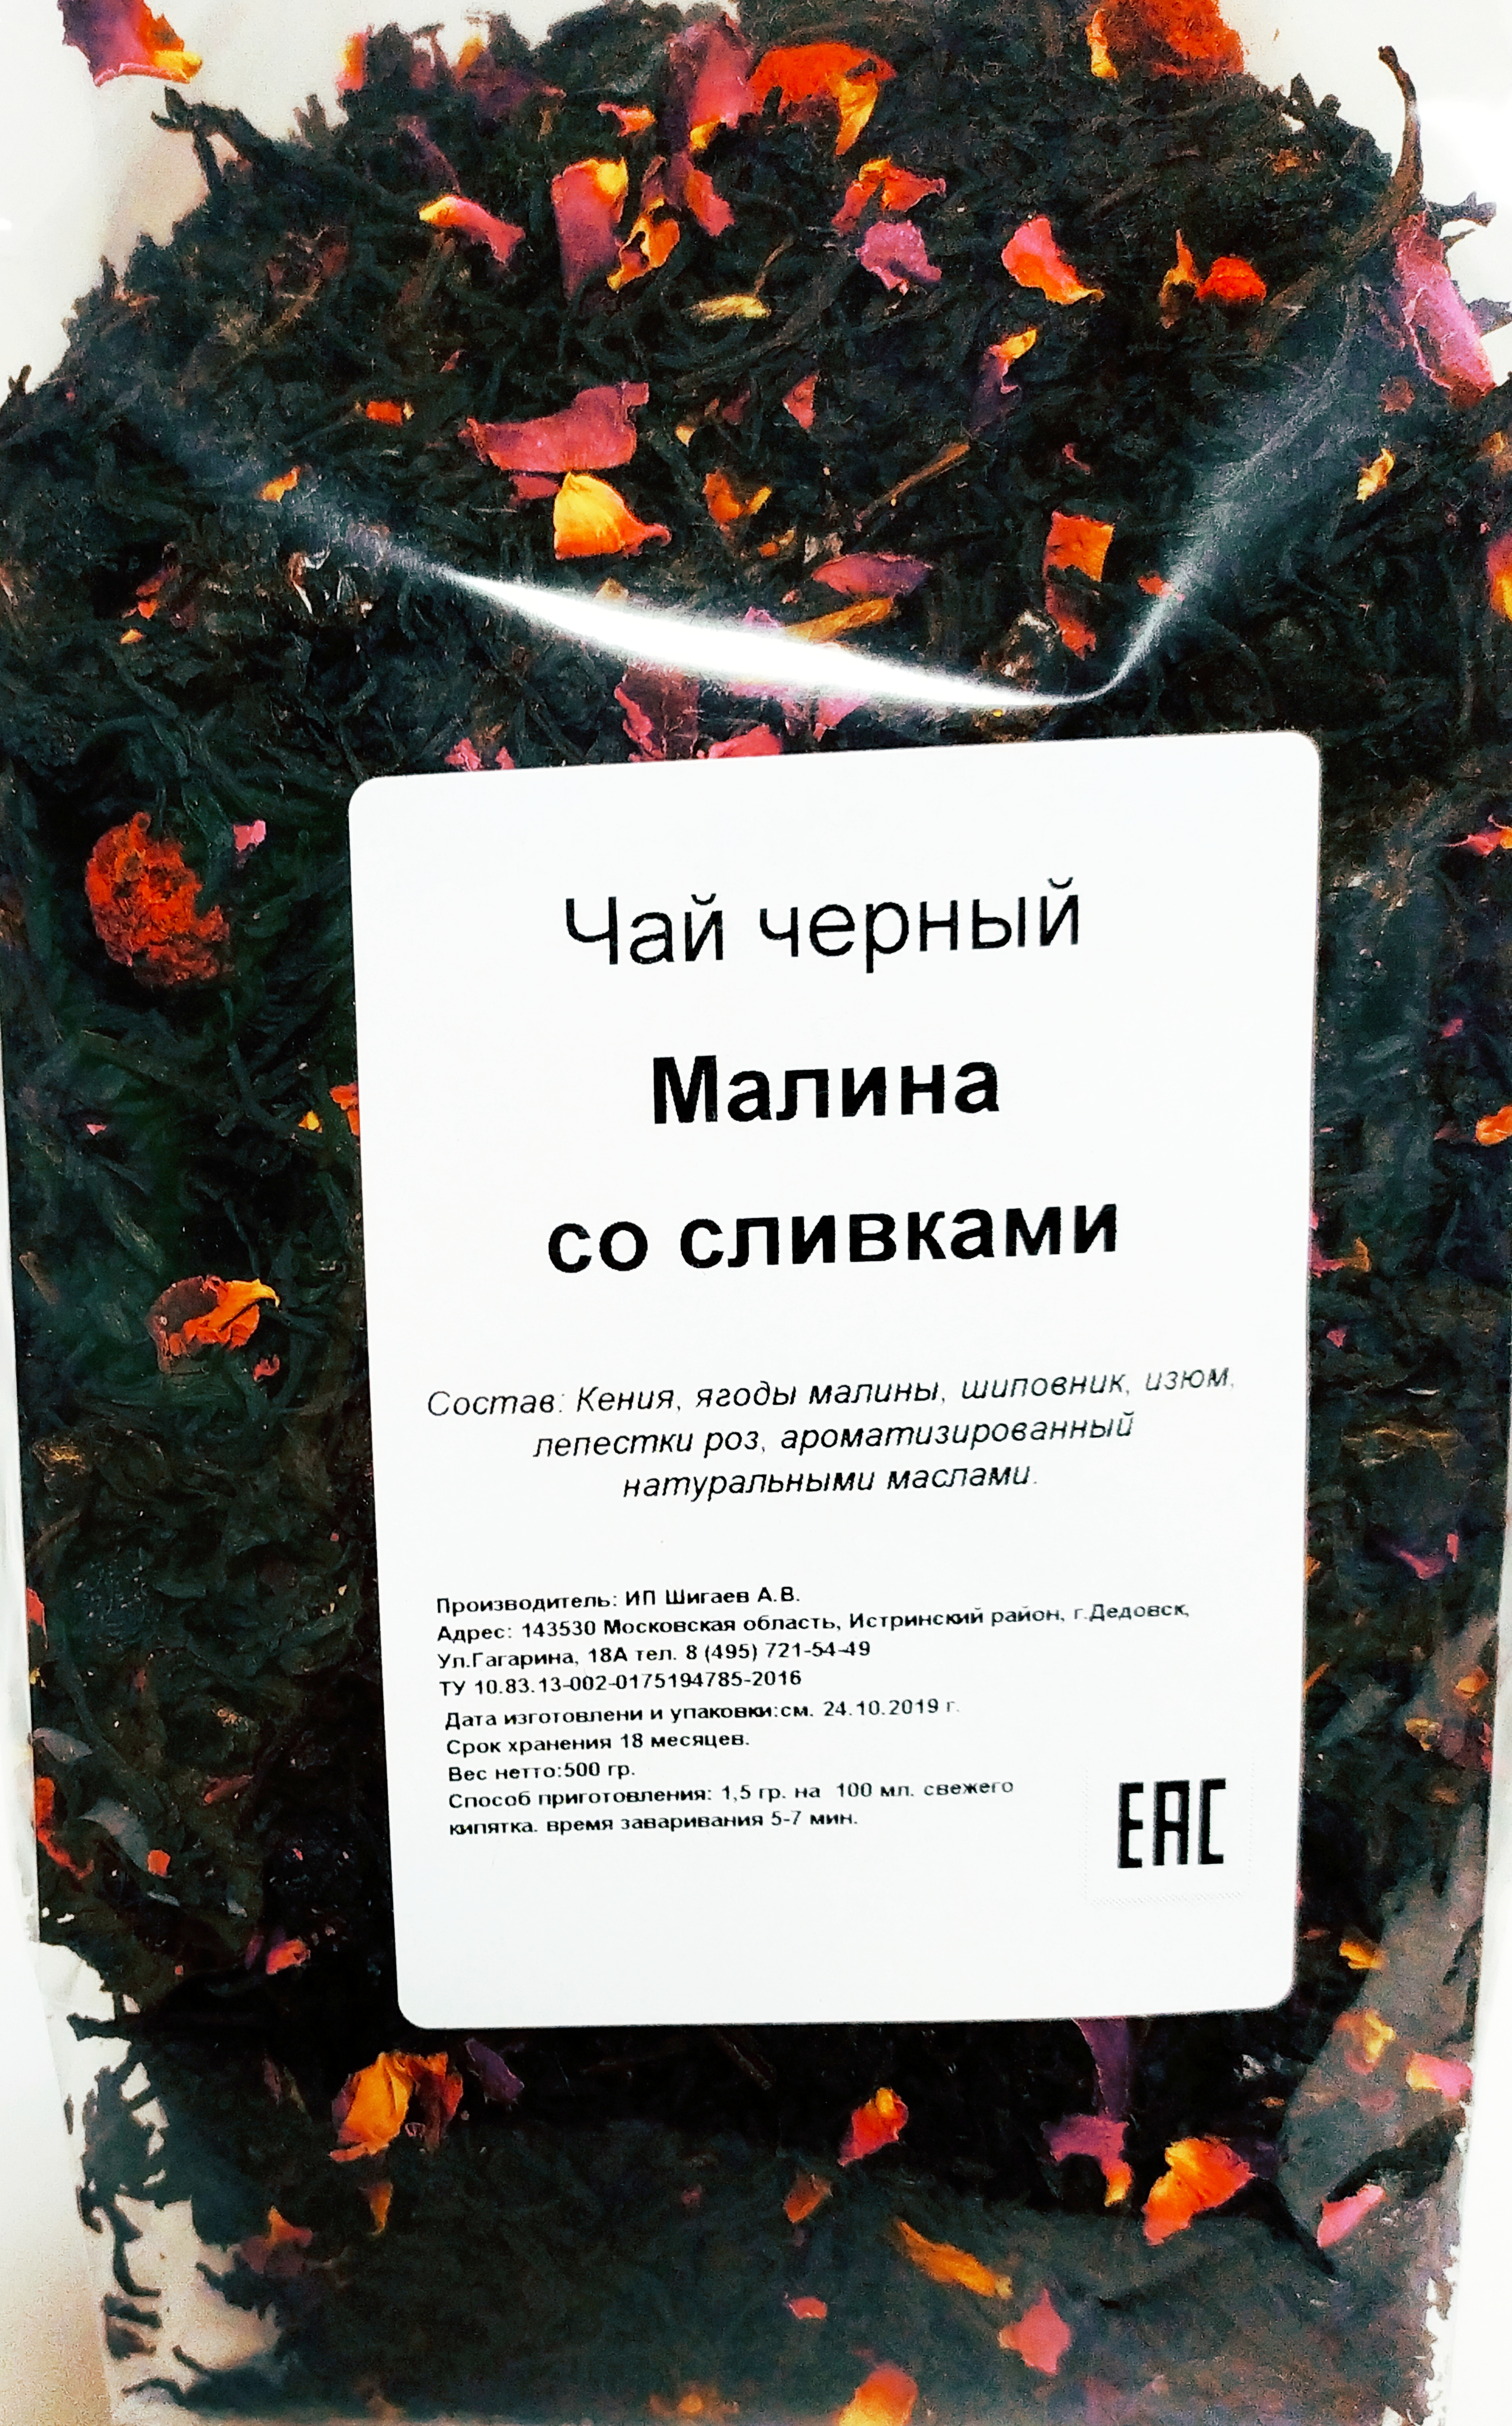 Чай ароматизированный Малина со сливками, 500 гр.